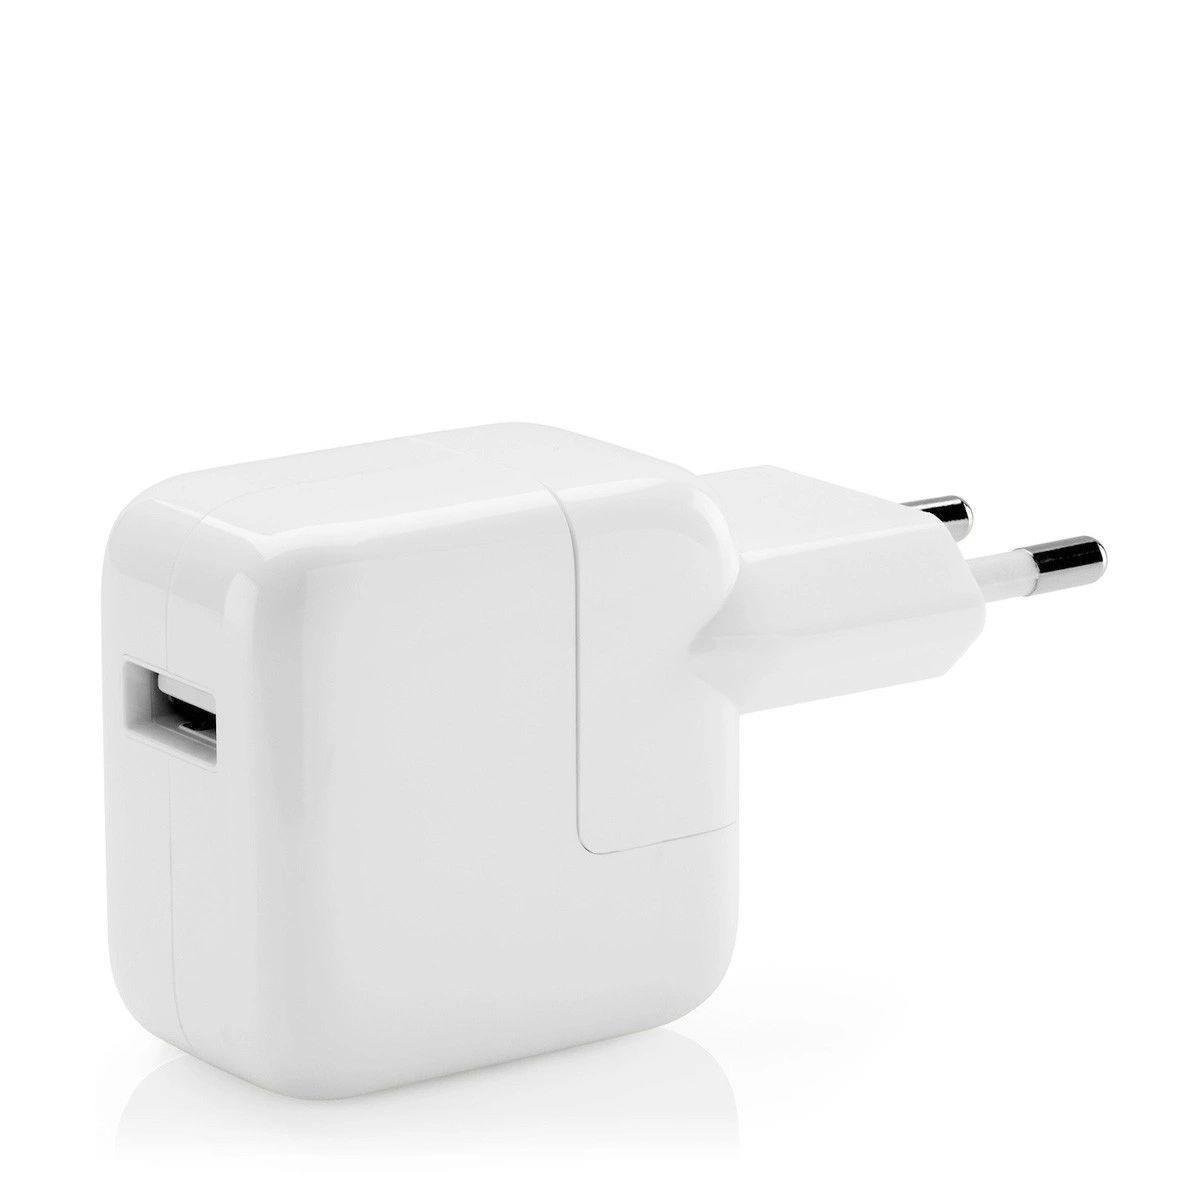 Original Apple 10w USB Power Adapter Charger iPad iPhone iPod